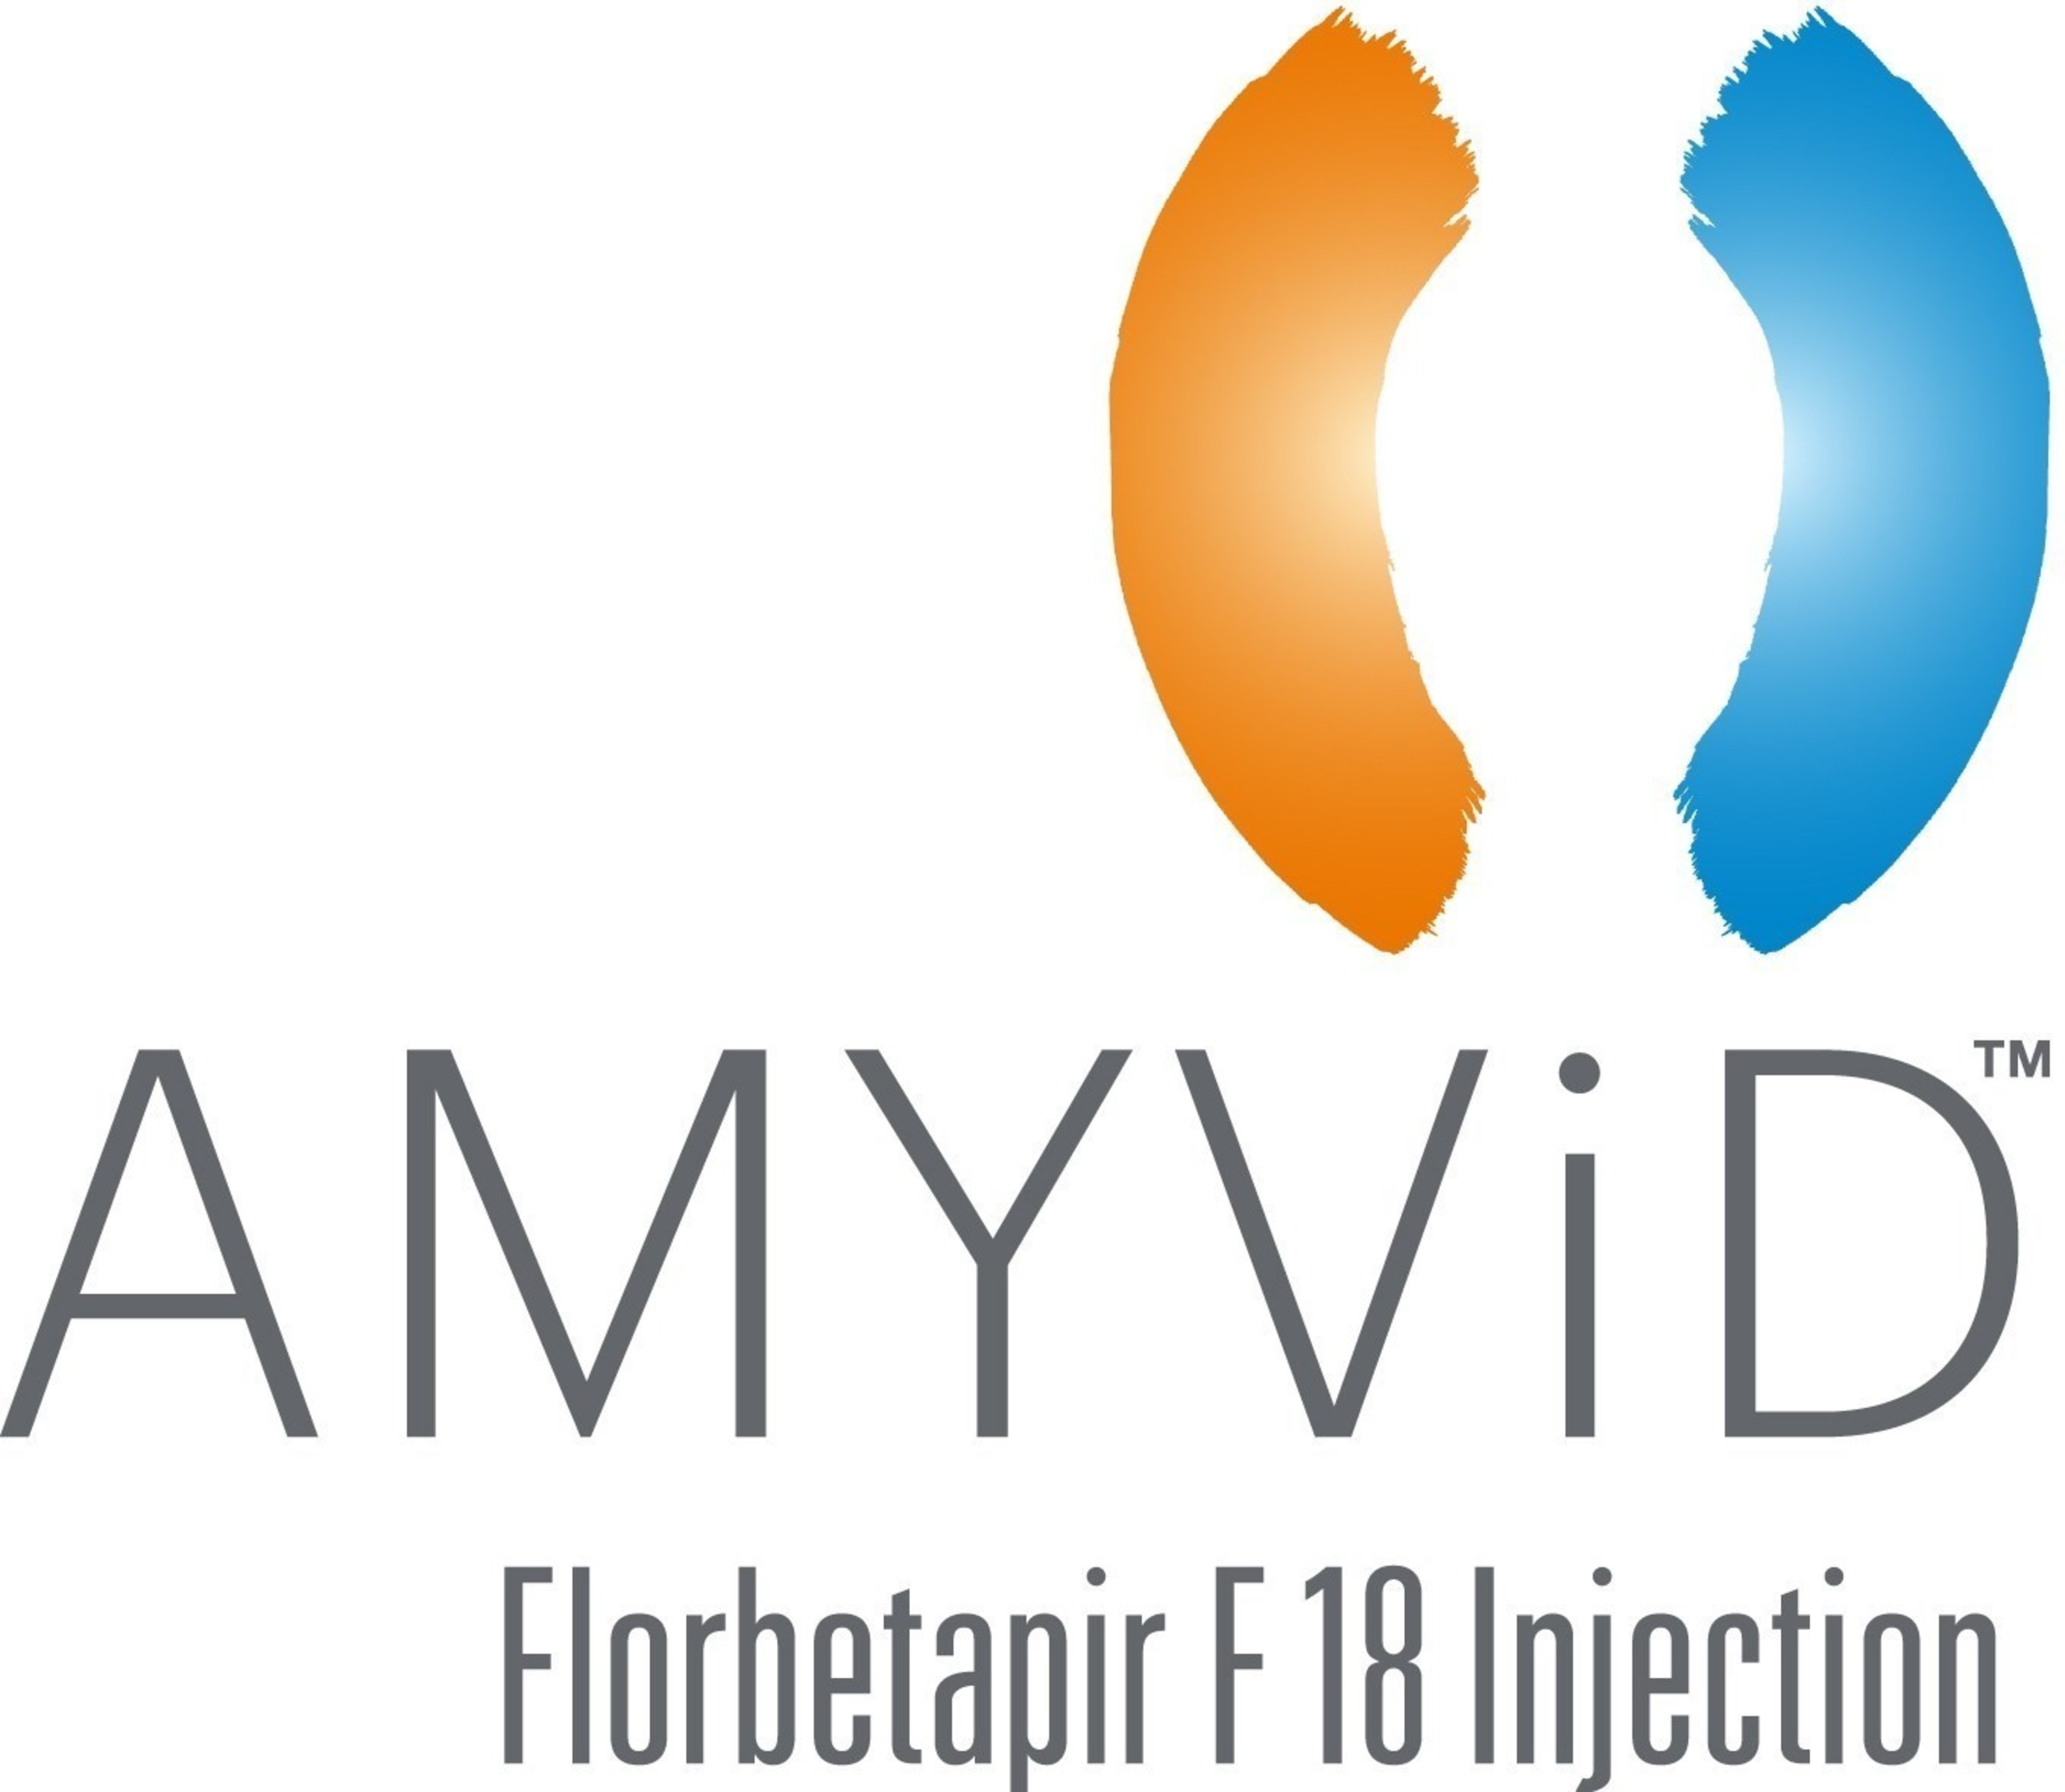 Amyvid logo, Florbetapir F 18 Injection